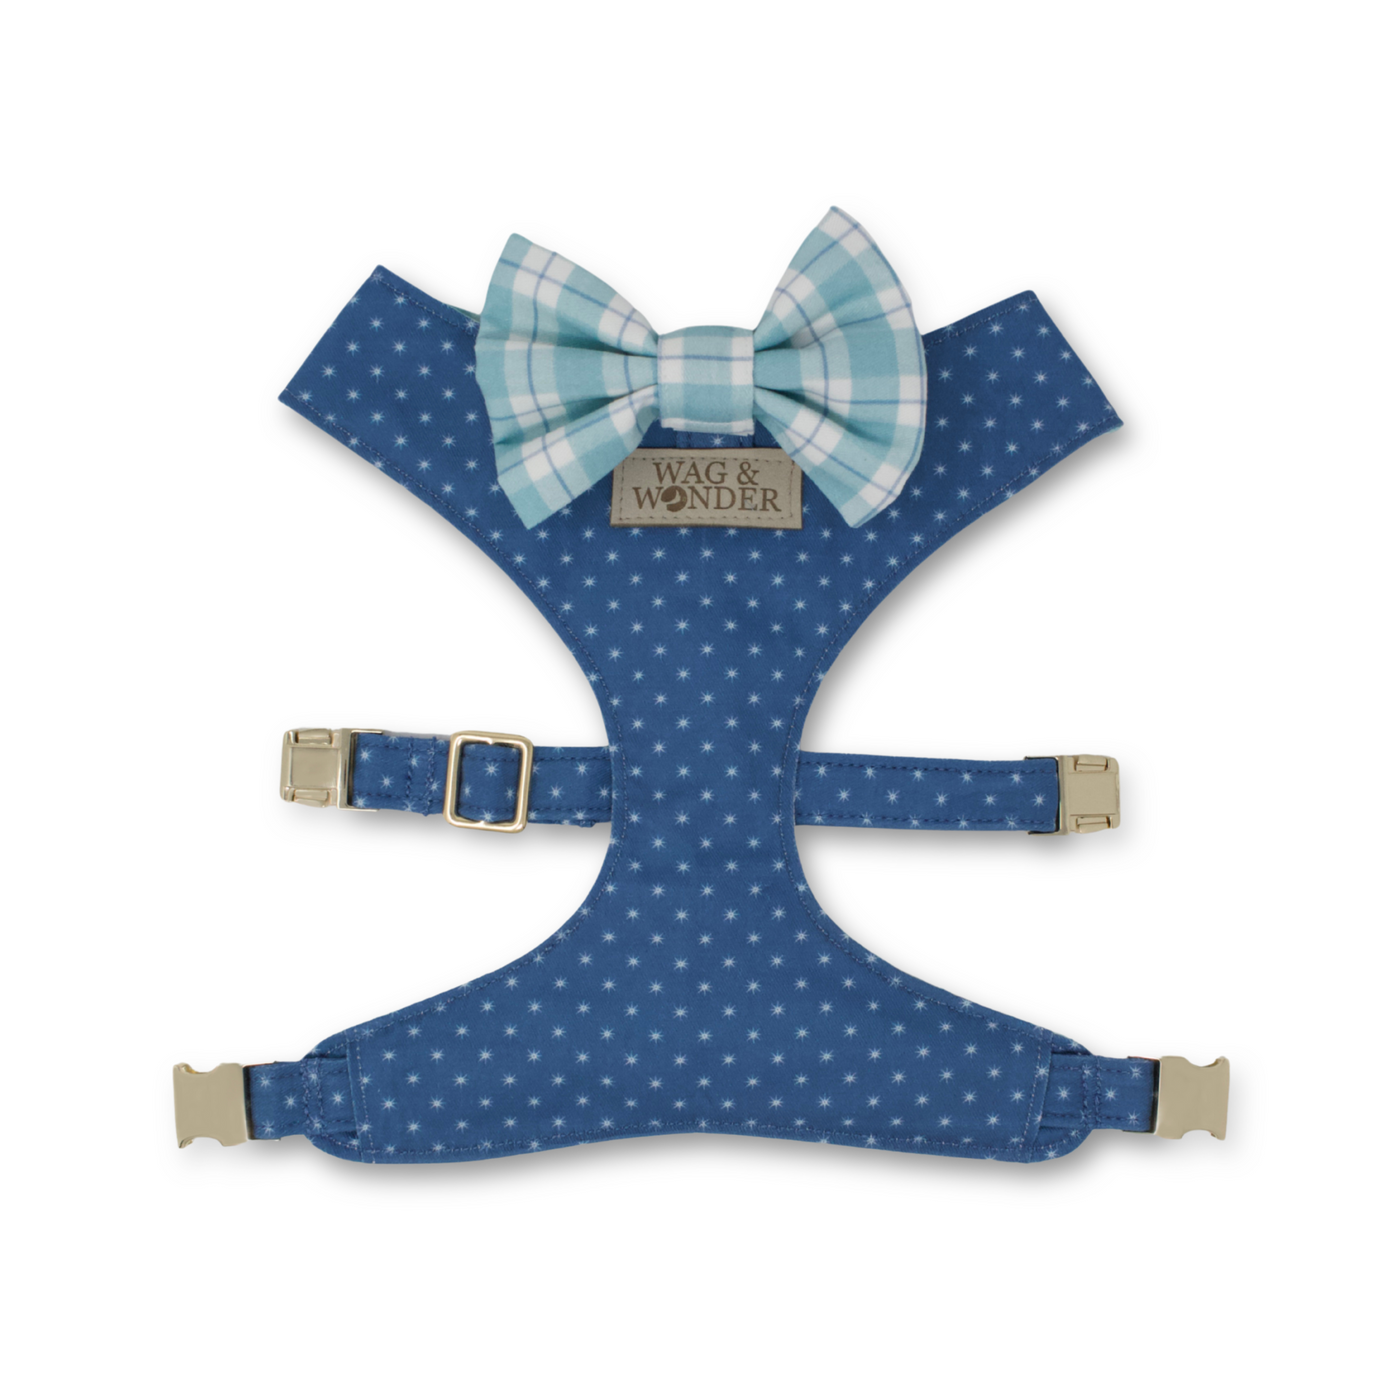 denim blue star print reversible dog harness + aqua & blue plaid dog bow tie